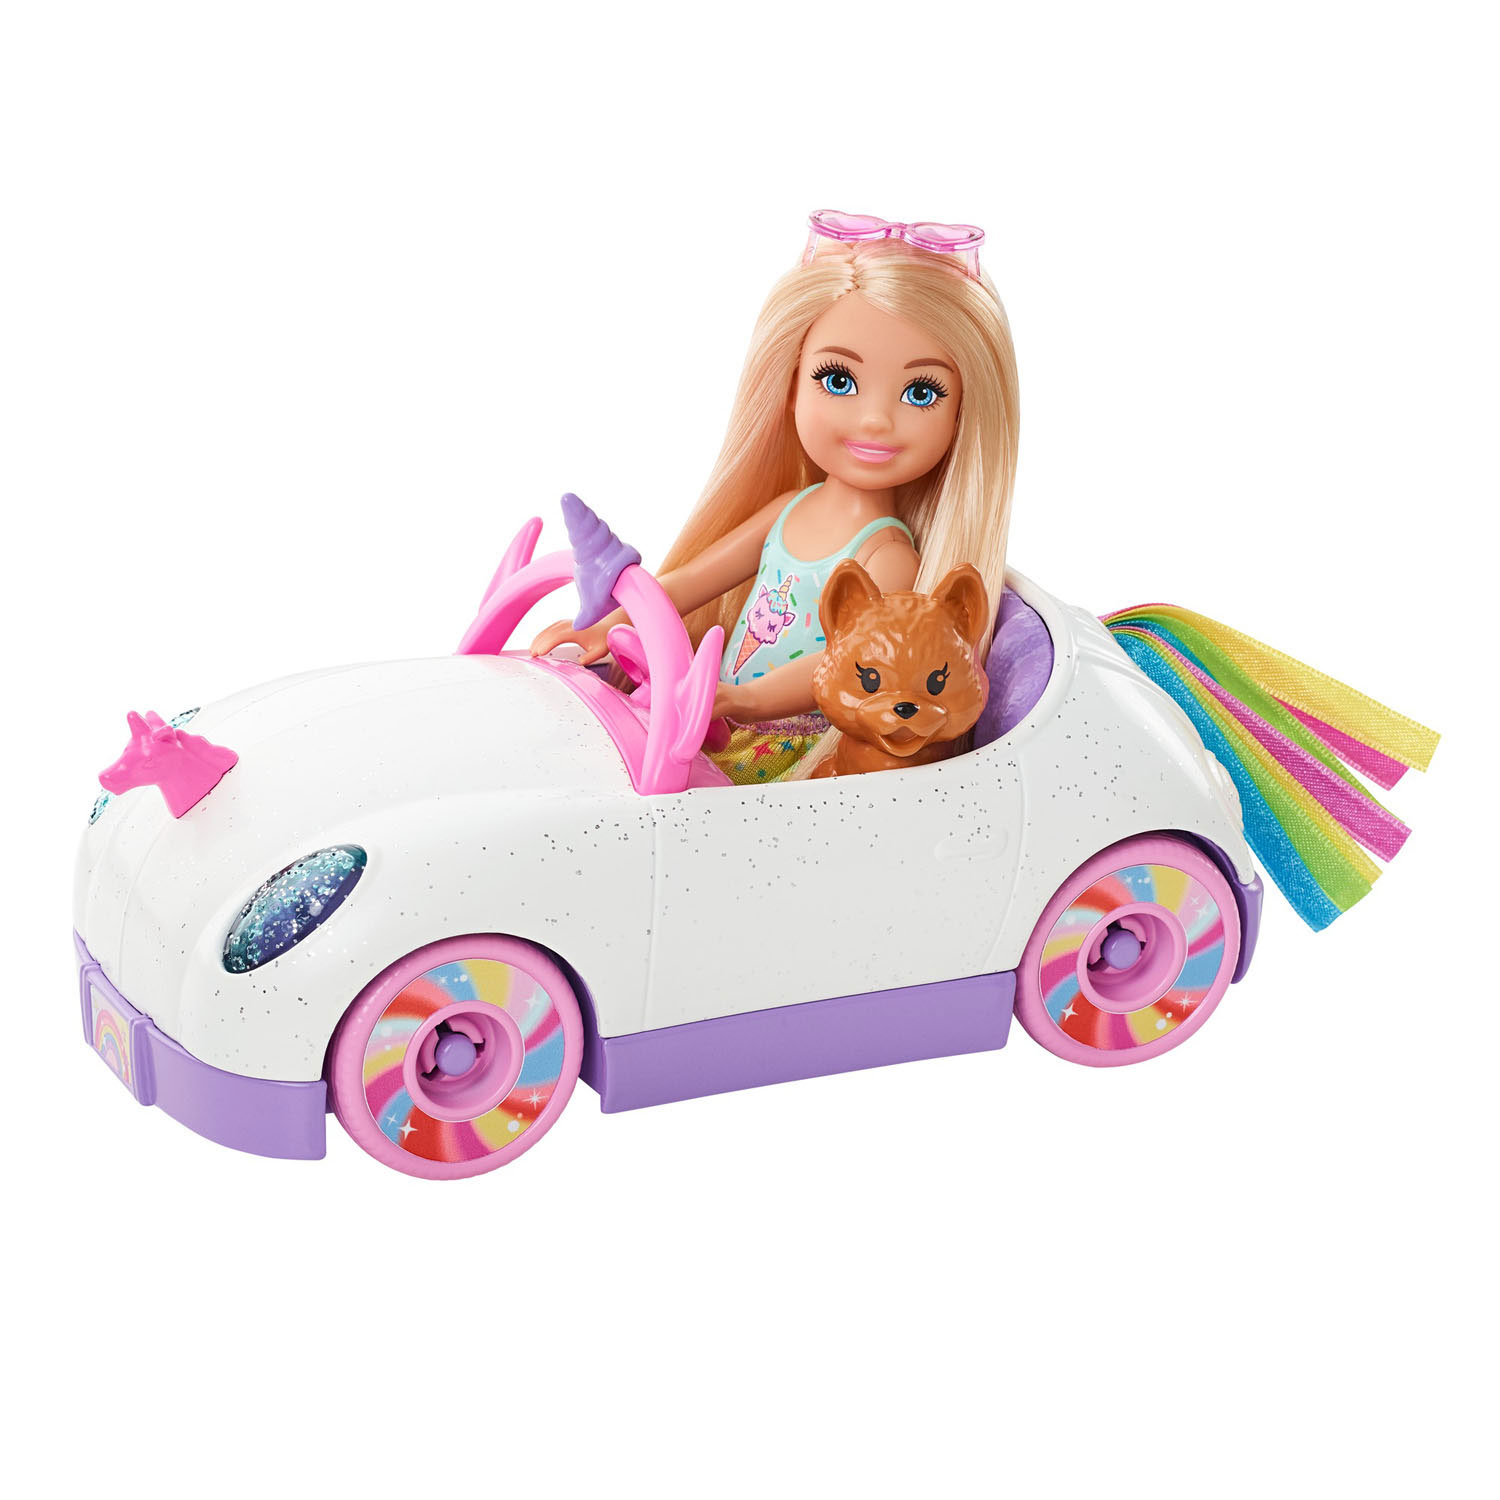 Barbie Chelsea Puppe und Auto